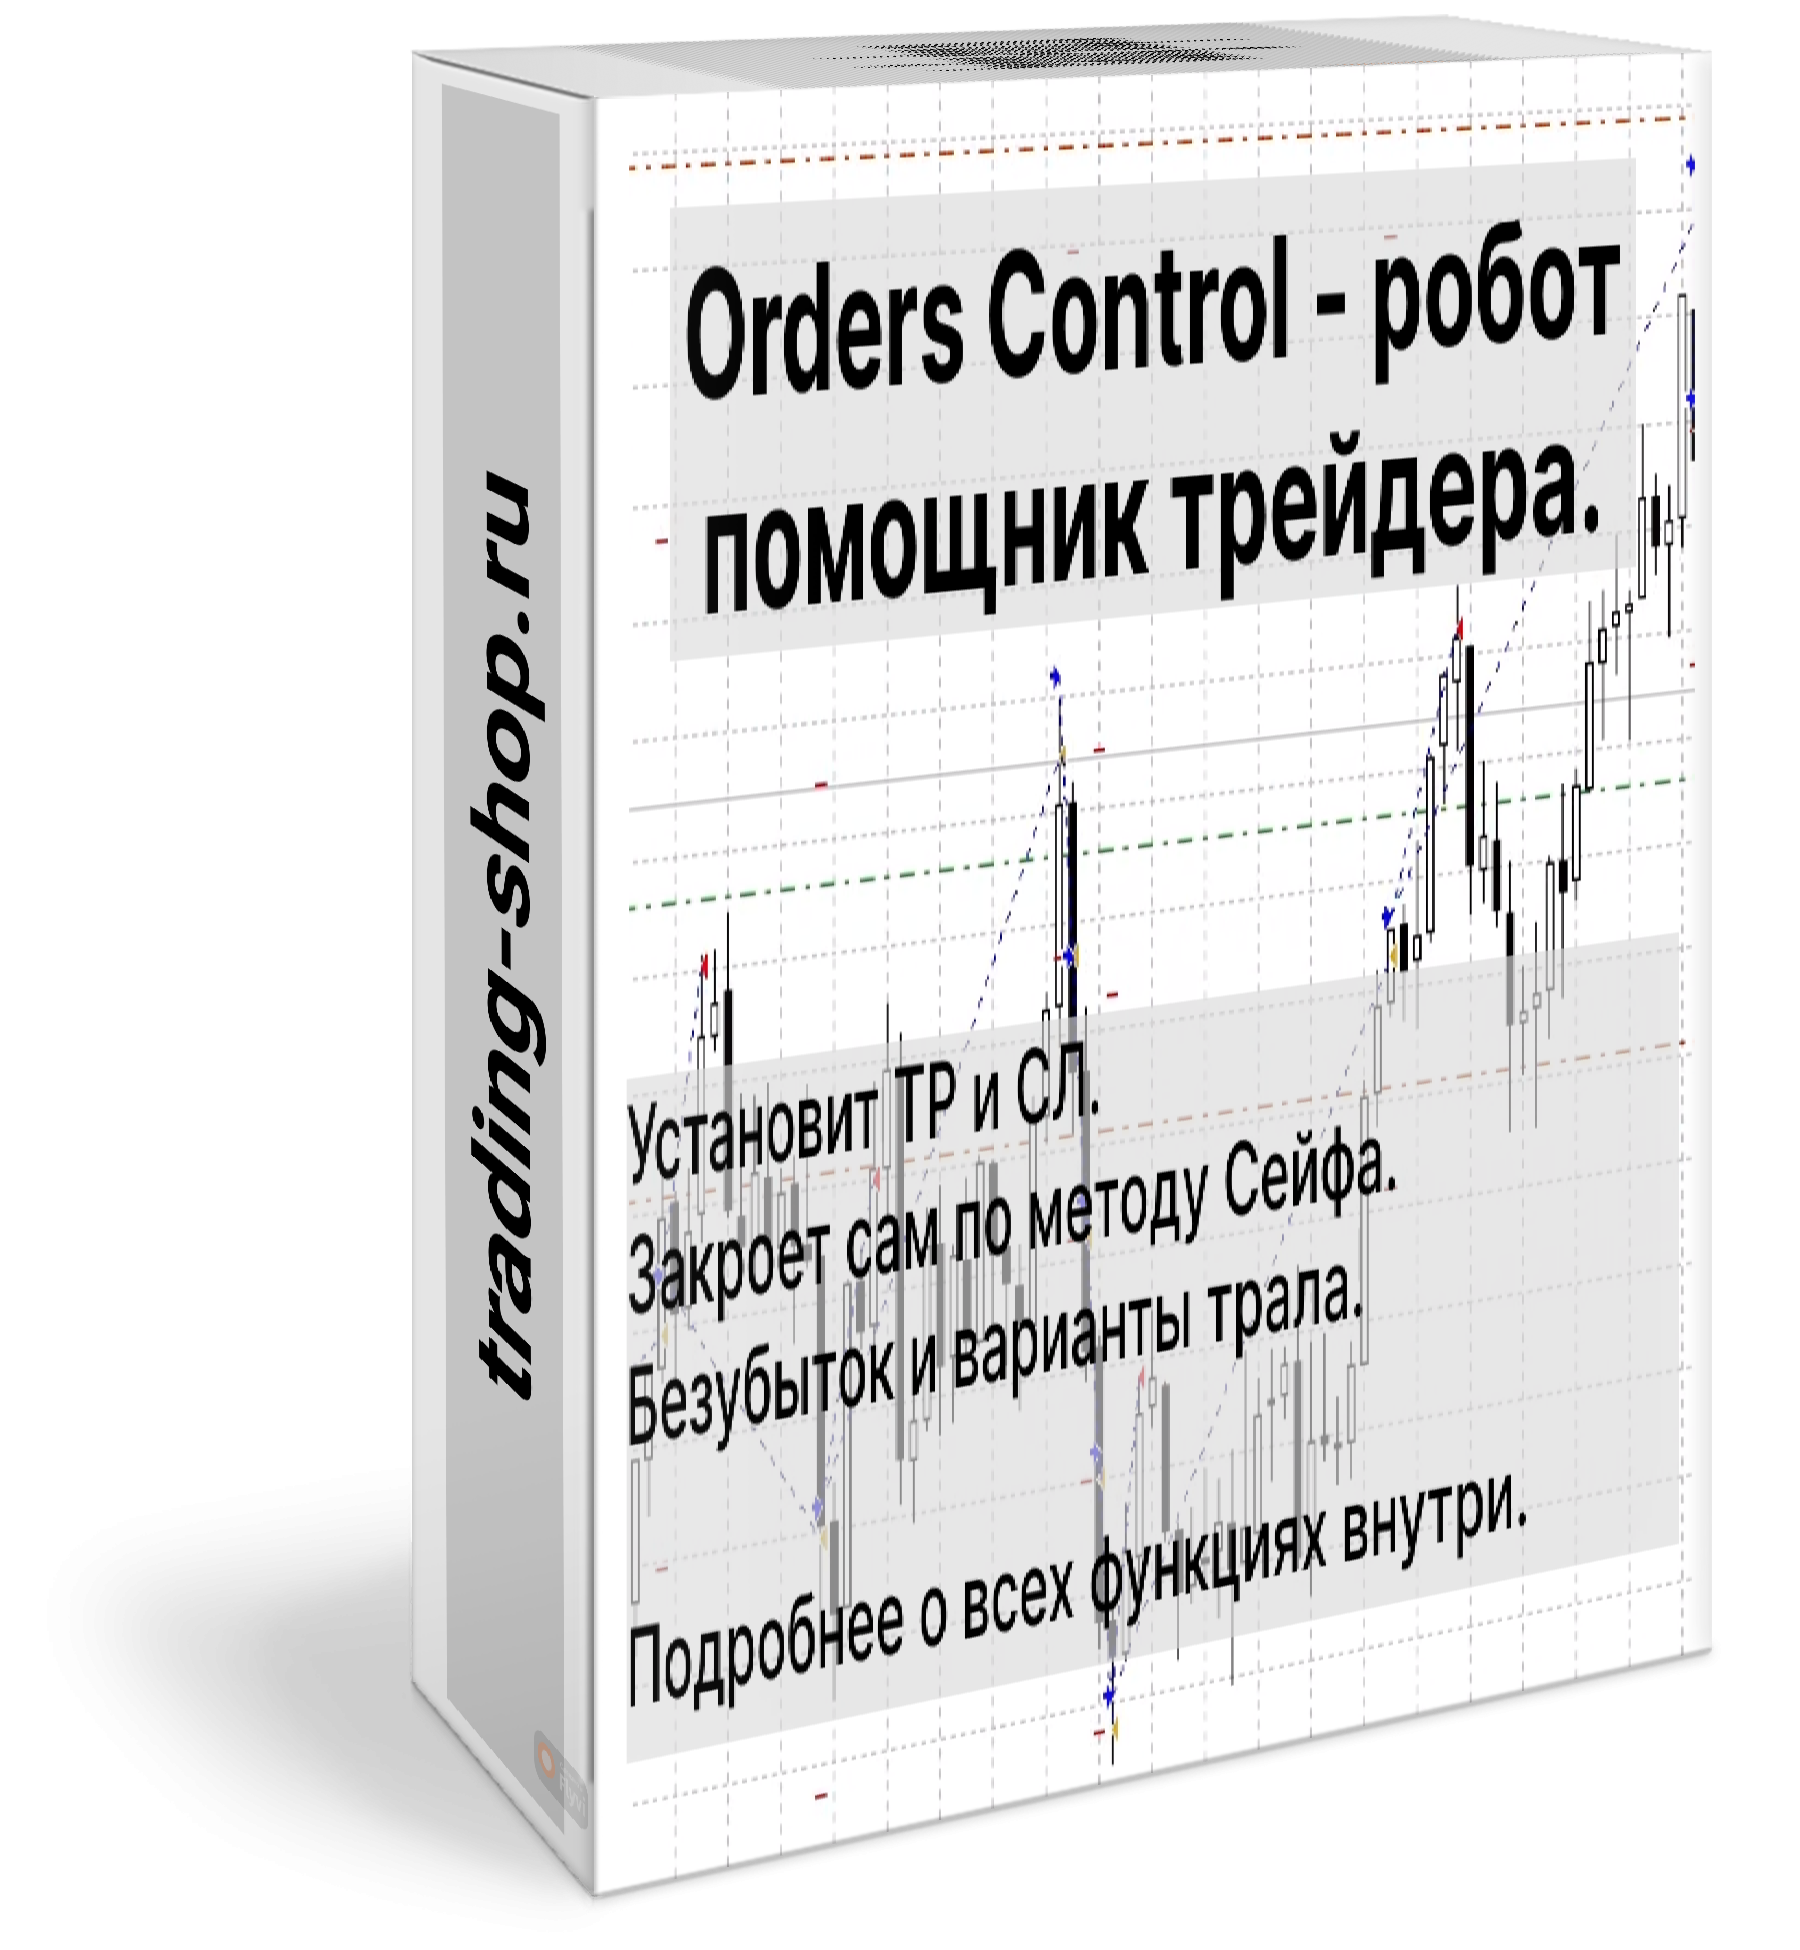 Orders control